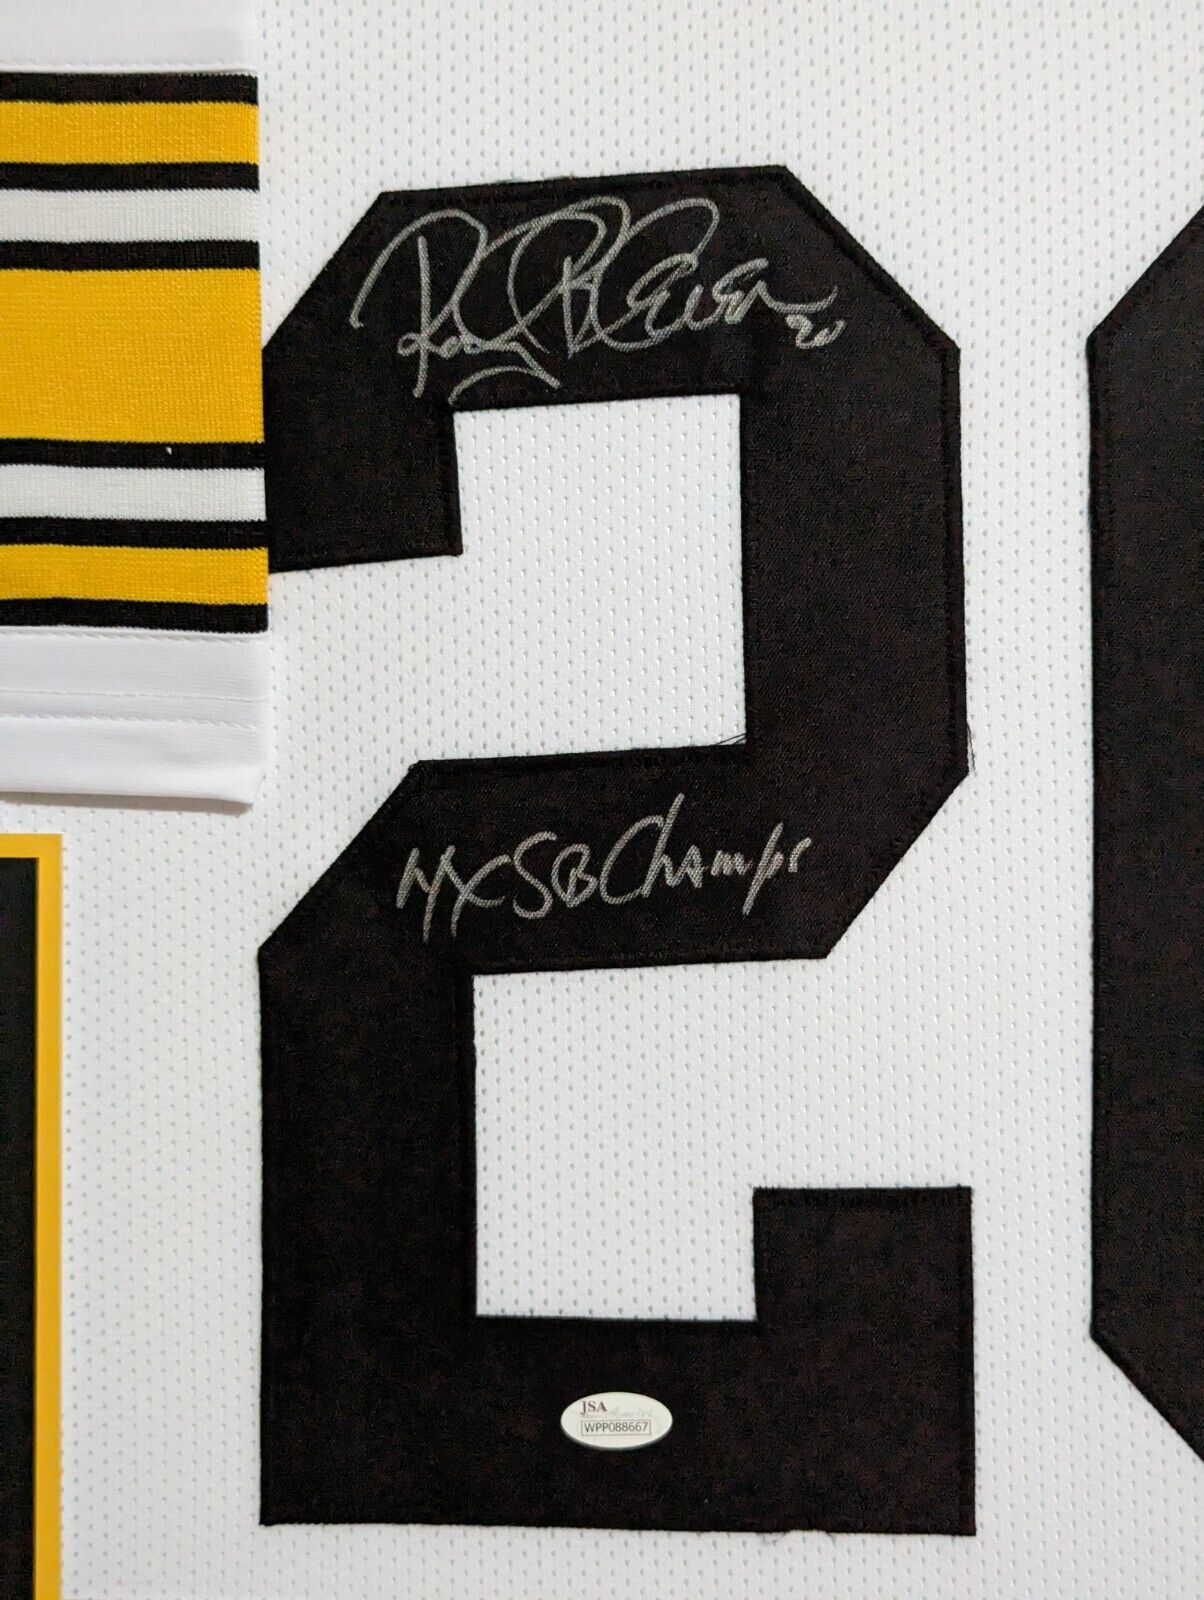 MVP Authentics Framed Pittsburgh Steelers Rocky Bleier Autographed Inscribed Jersey Jsa Coa 450 sports jersey framing , jersey framing